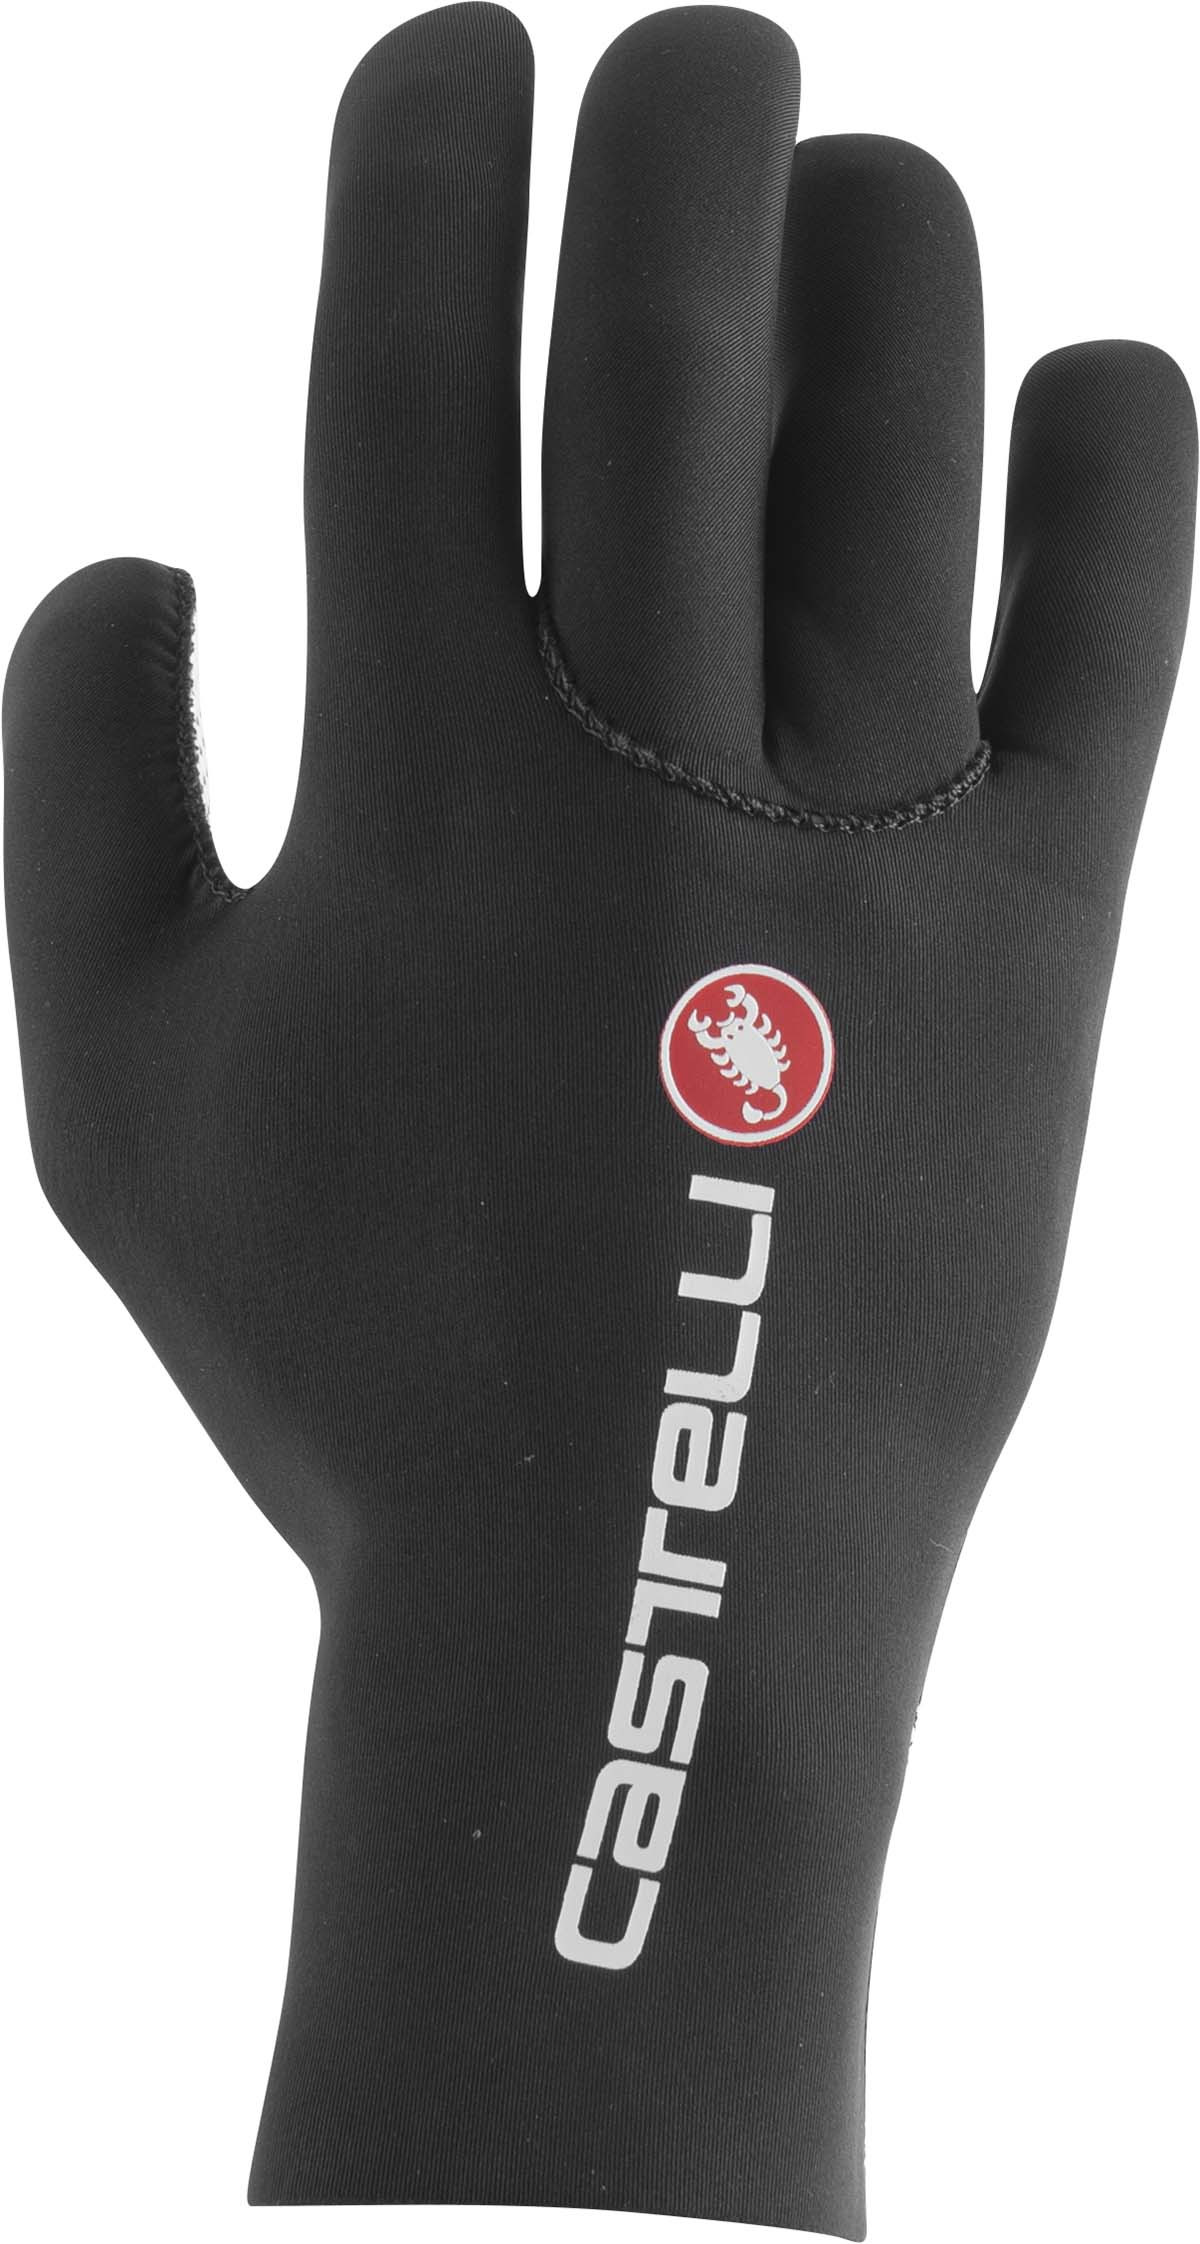 Castelli Diluvio C Glove Neoprene - Black